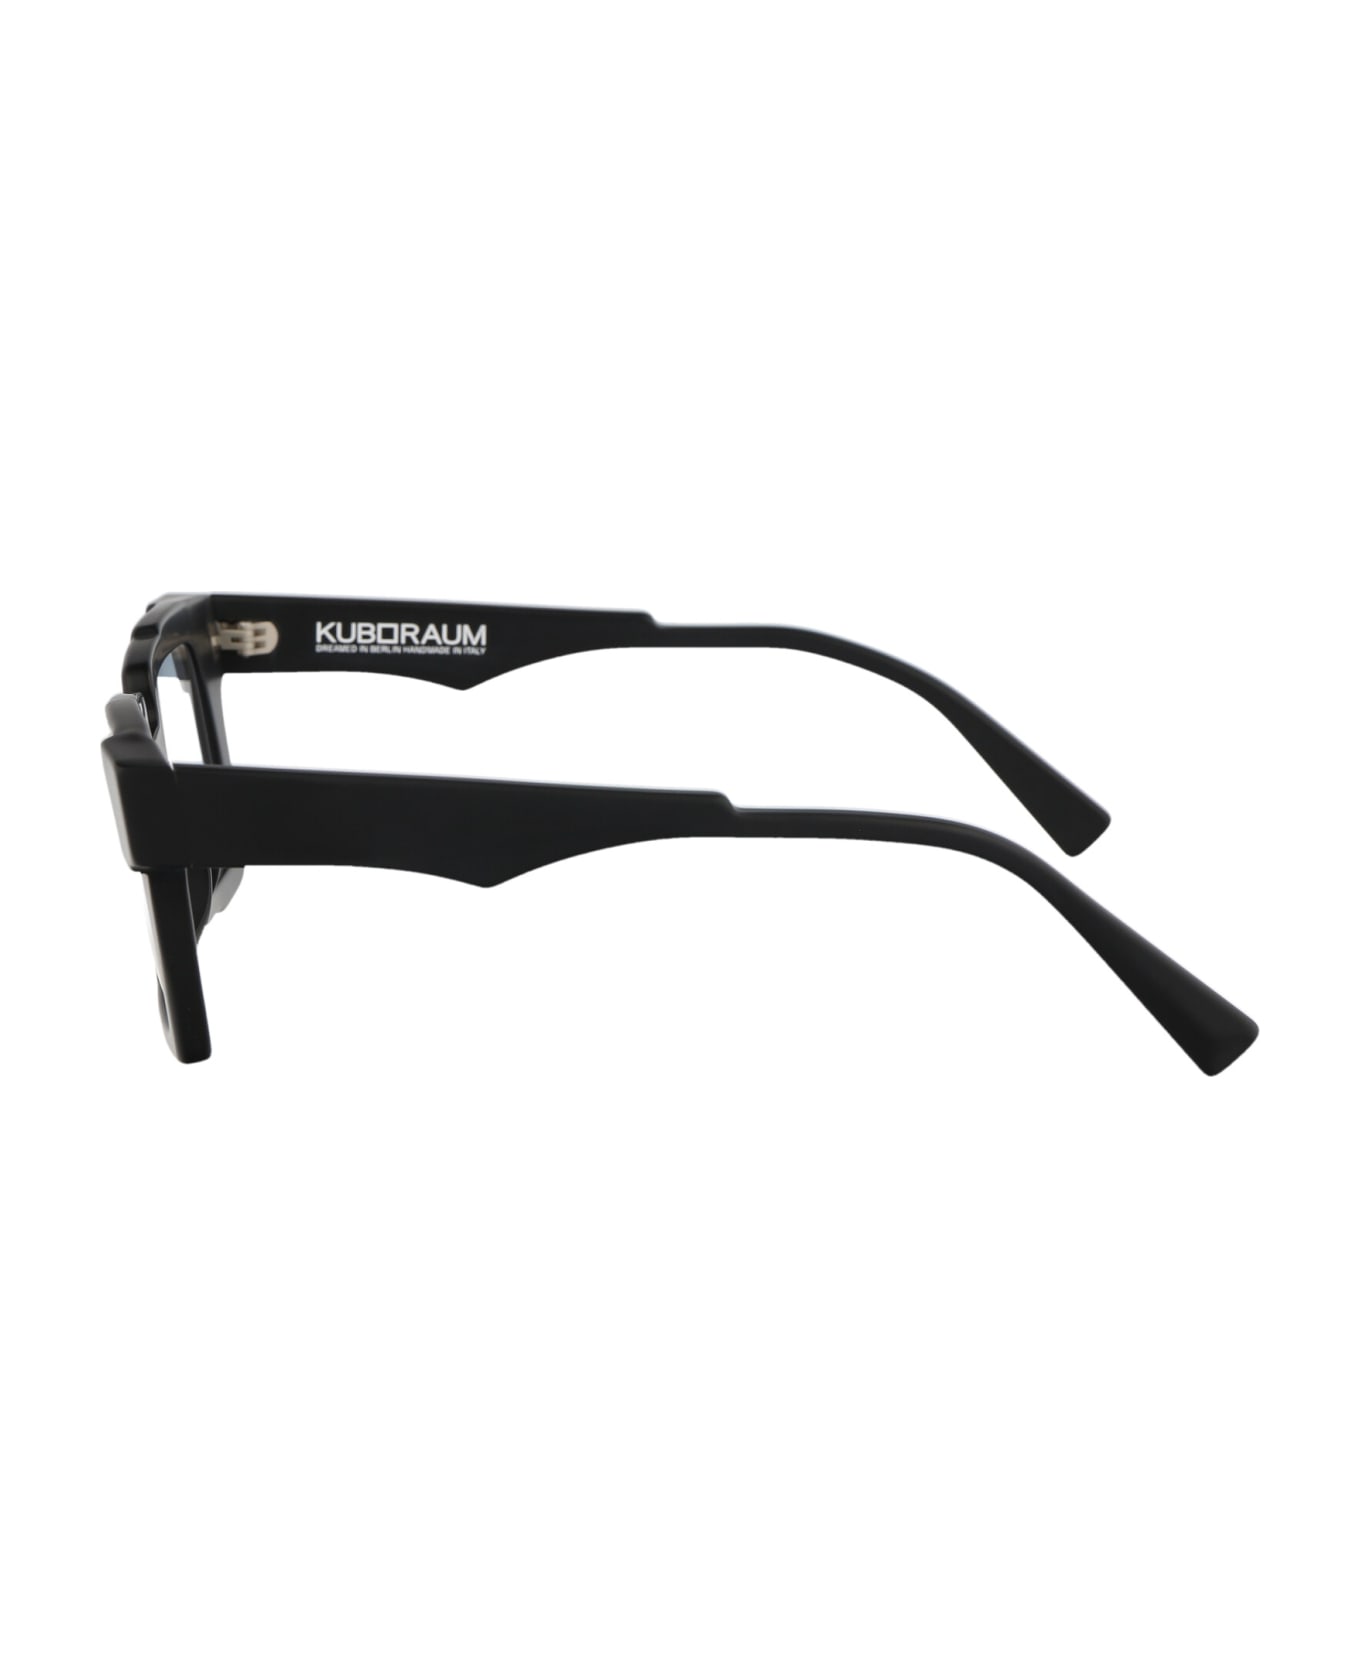 Kuboraum Maske K31 Glasses - BM black アイウェア